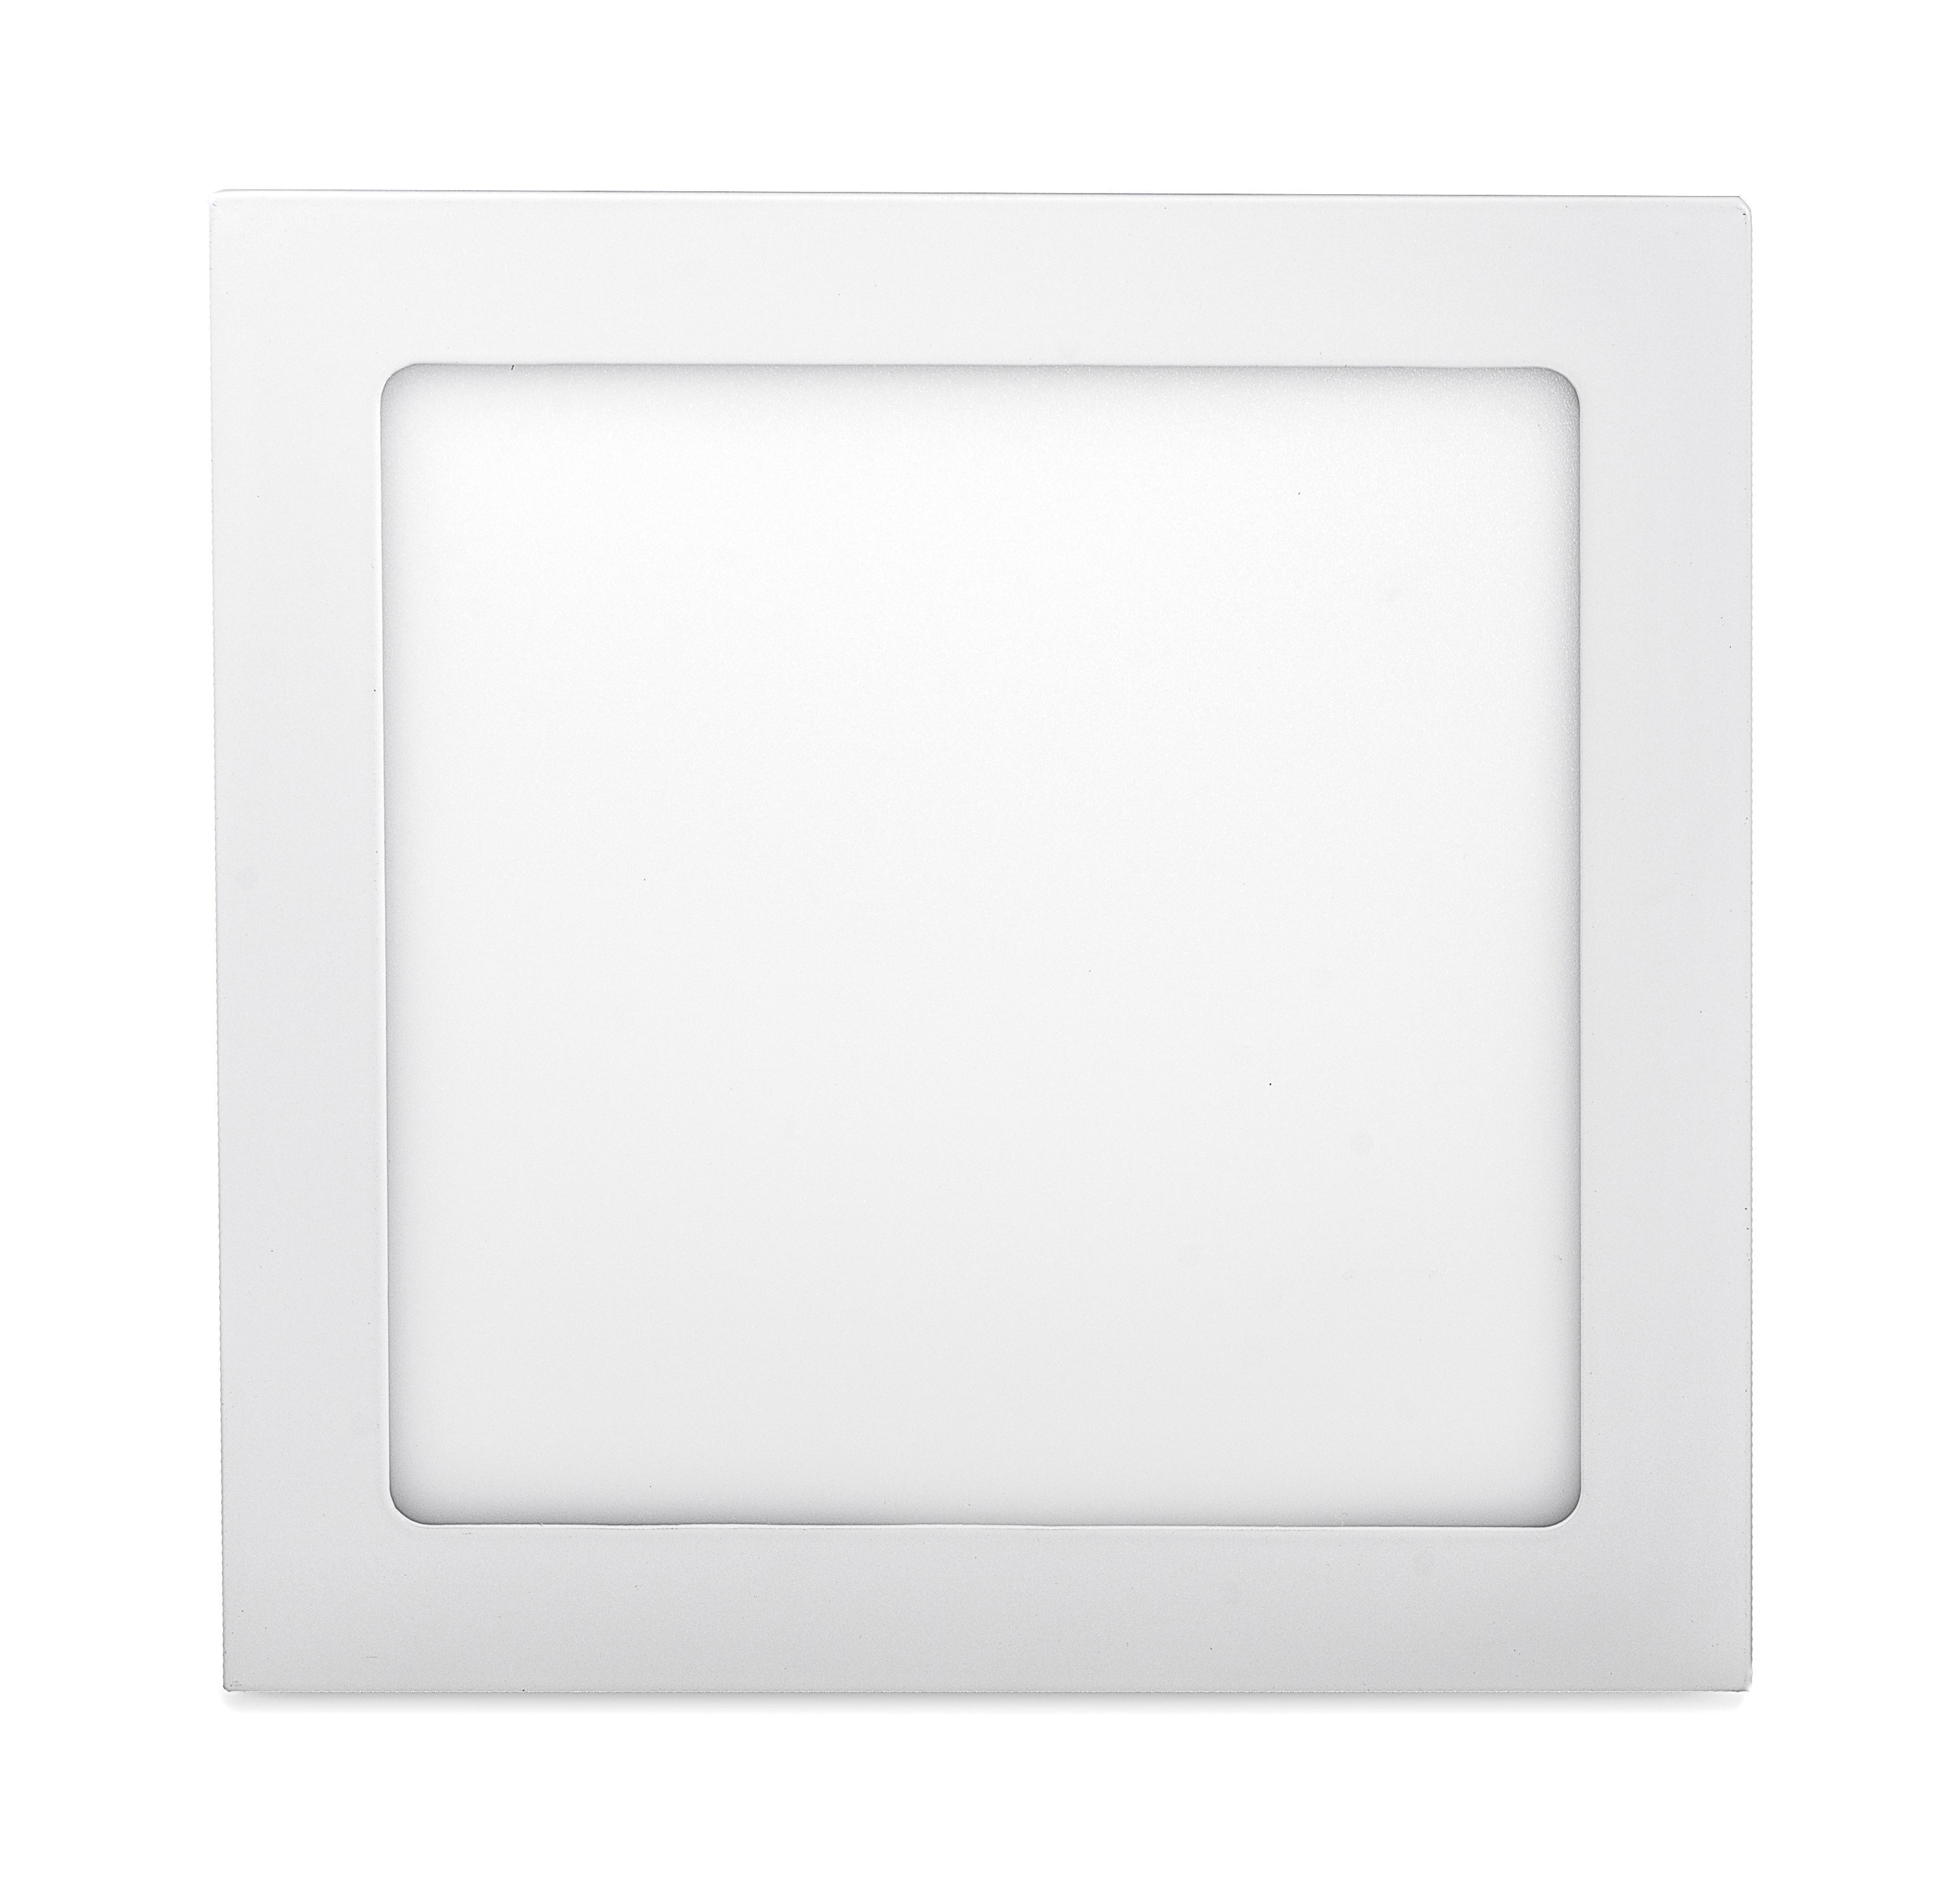 LED Solution Bílý vestavný LED panel hranatý 175 x 175mm 12W Studená bílá - VZOREK VYP229